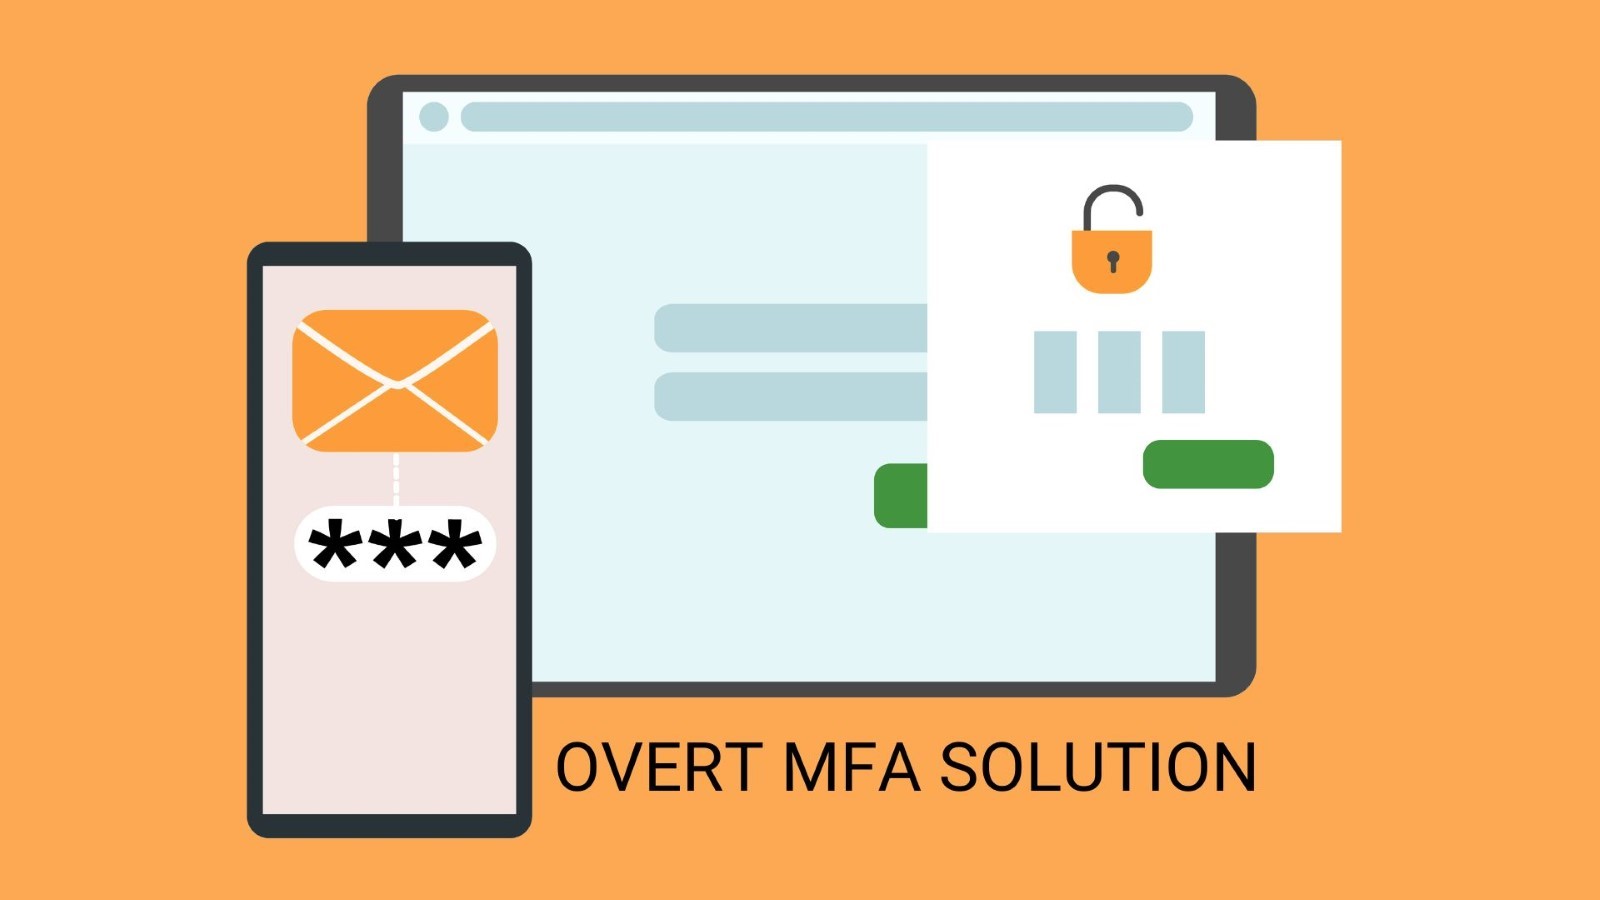 overt software solution MFA blogpost feature image